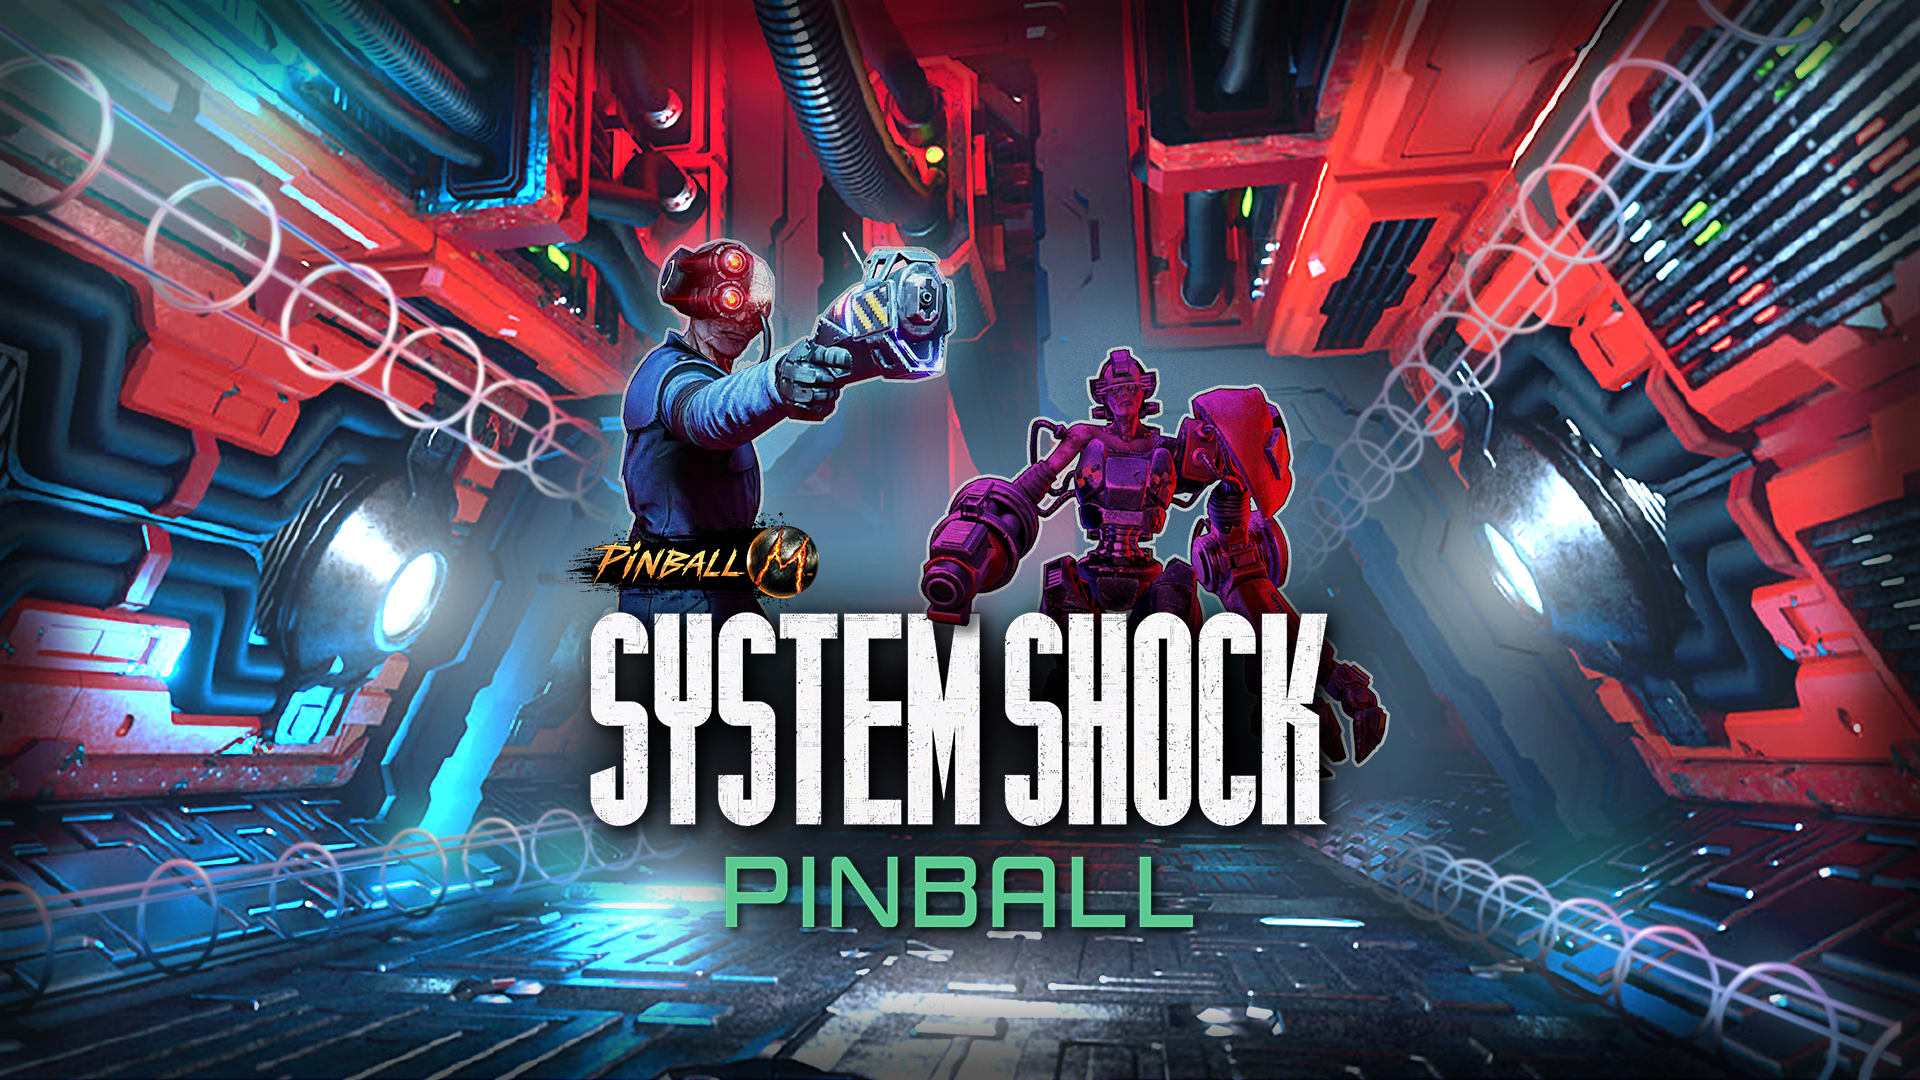 Pinball M - System Shock Pinball 1